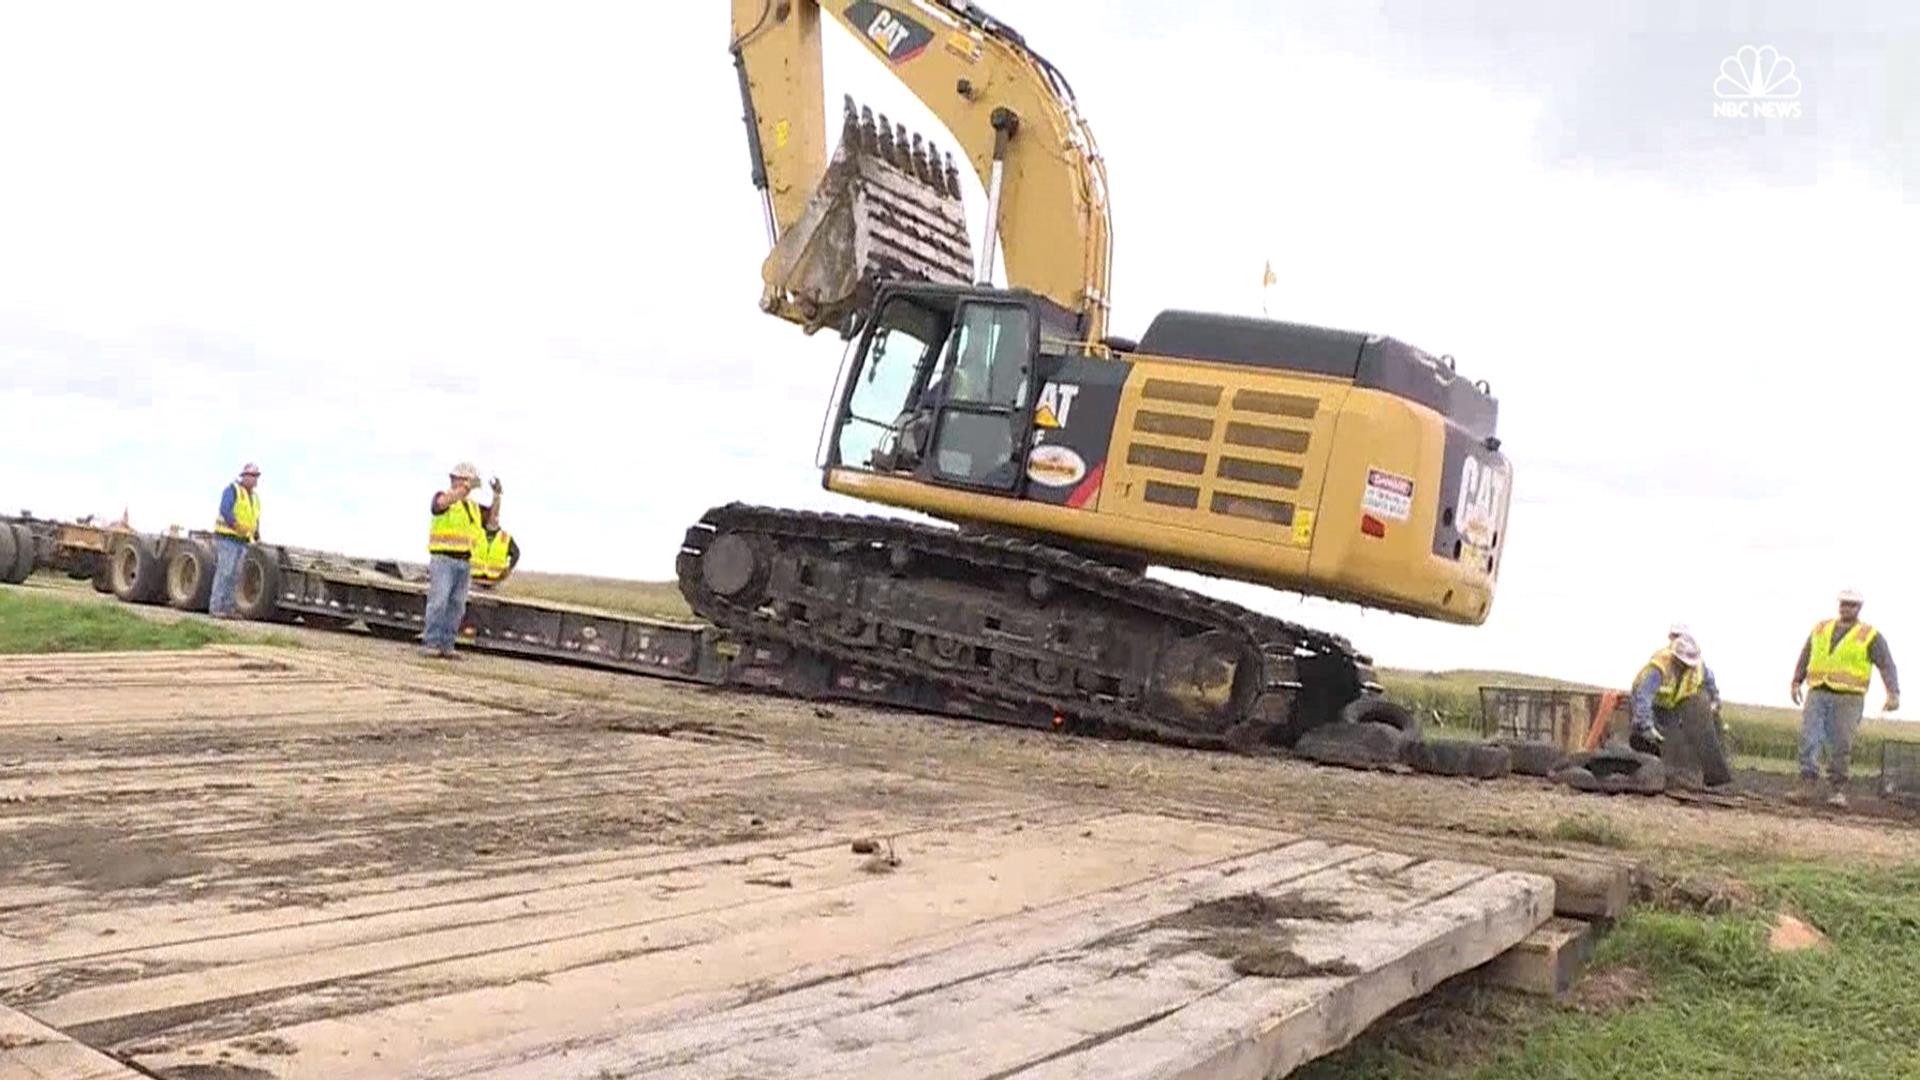 Equipment Removed From Dakota Access Pipeline Worksite